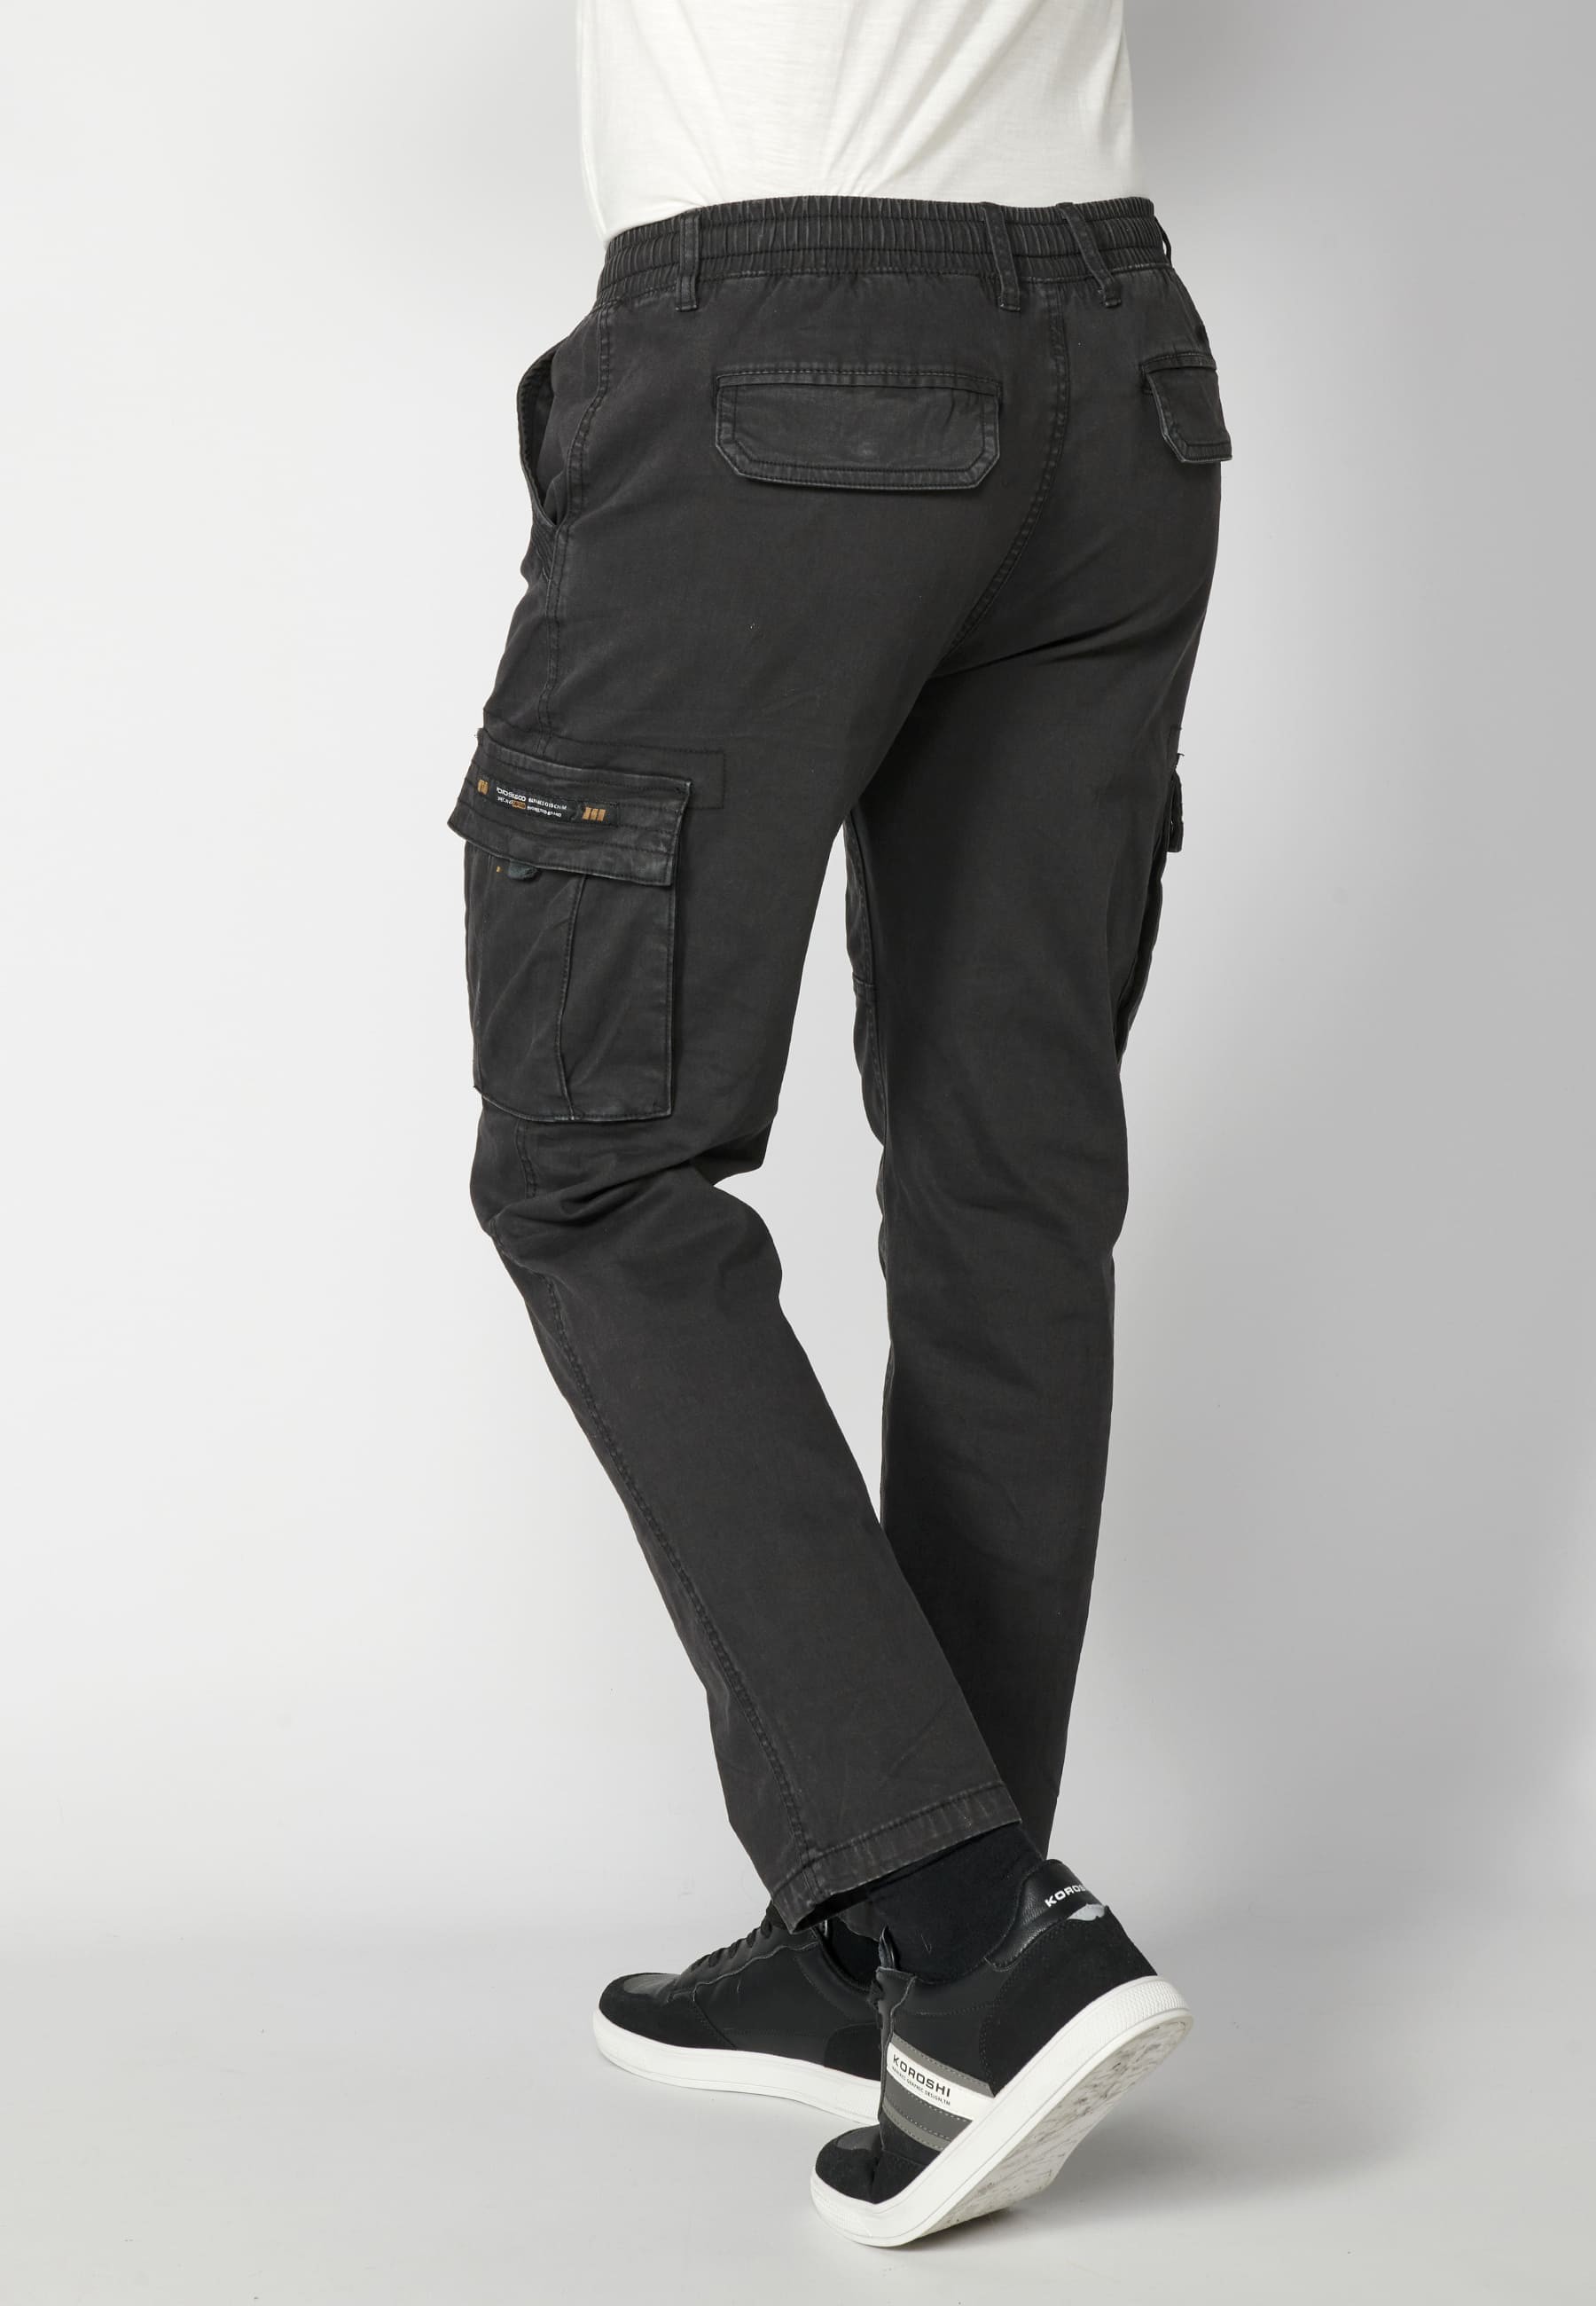 Black cargo style pants for Men